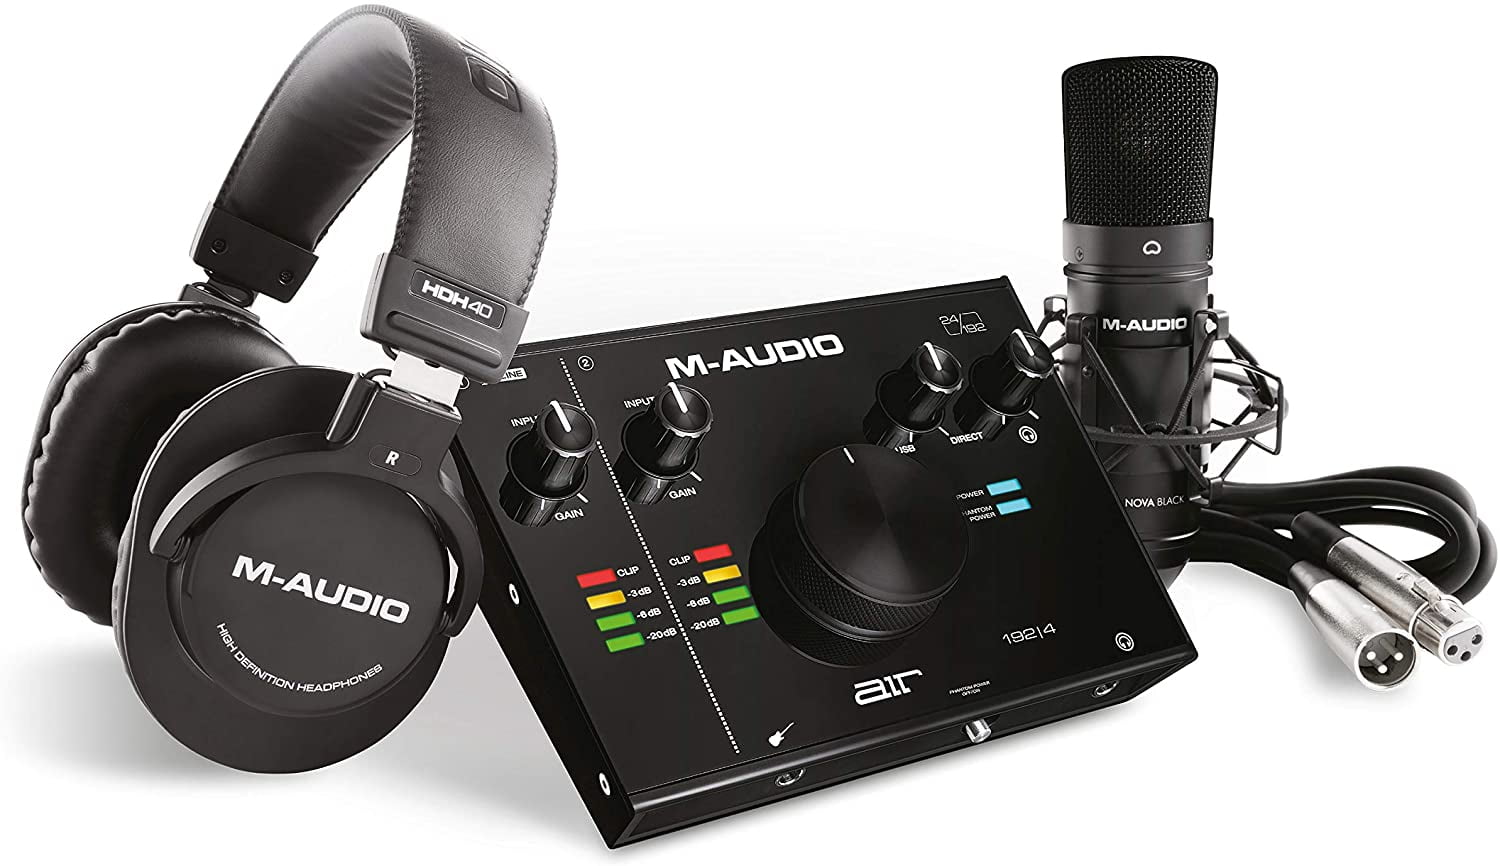 M-Audio - Complete Recording Bundle - USB Audio Interface, Microphone,  Shock mount, Cable, Headphones and Software Suite - AIR 192|4 Vocal Studio  Pro